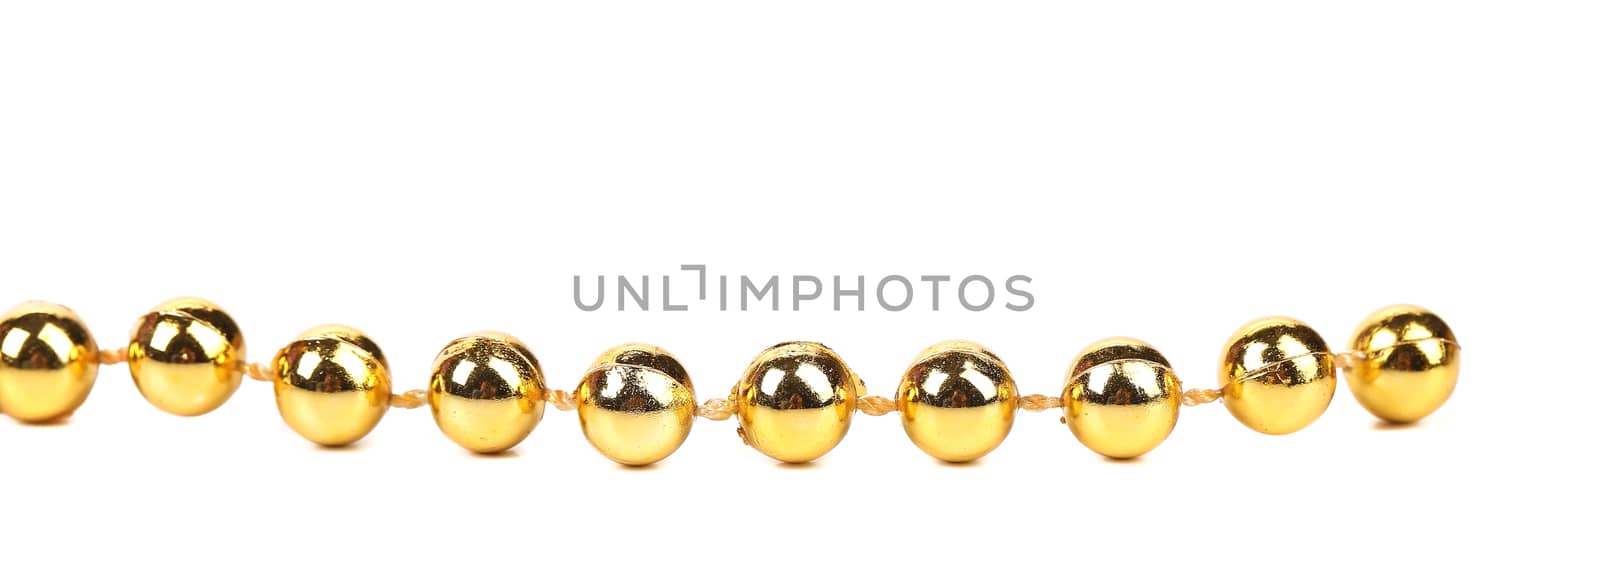 Decorative golden beads. Horisontal. by indigolotos